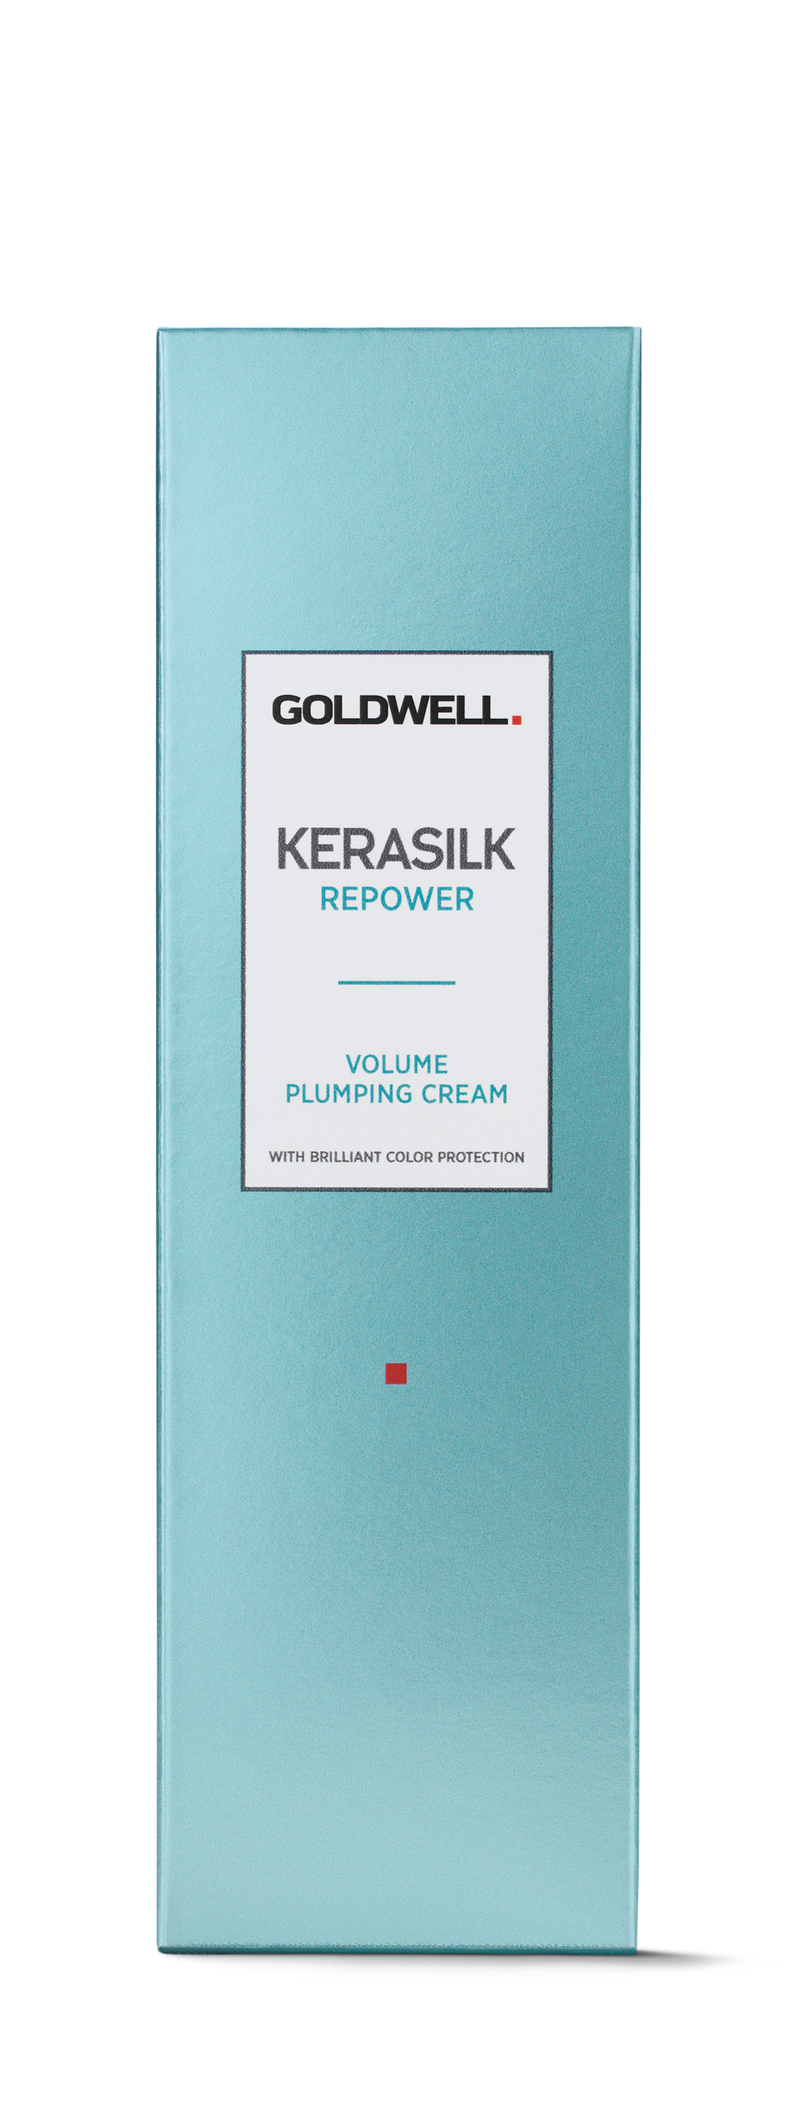 Goldwell-Kerasilk Repower- Strukturgebende Cream 75ml